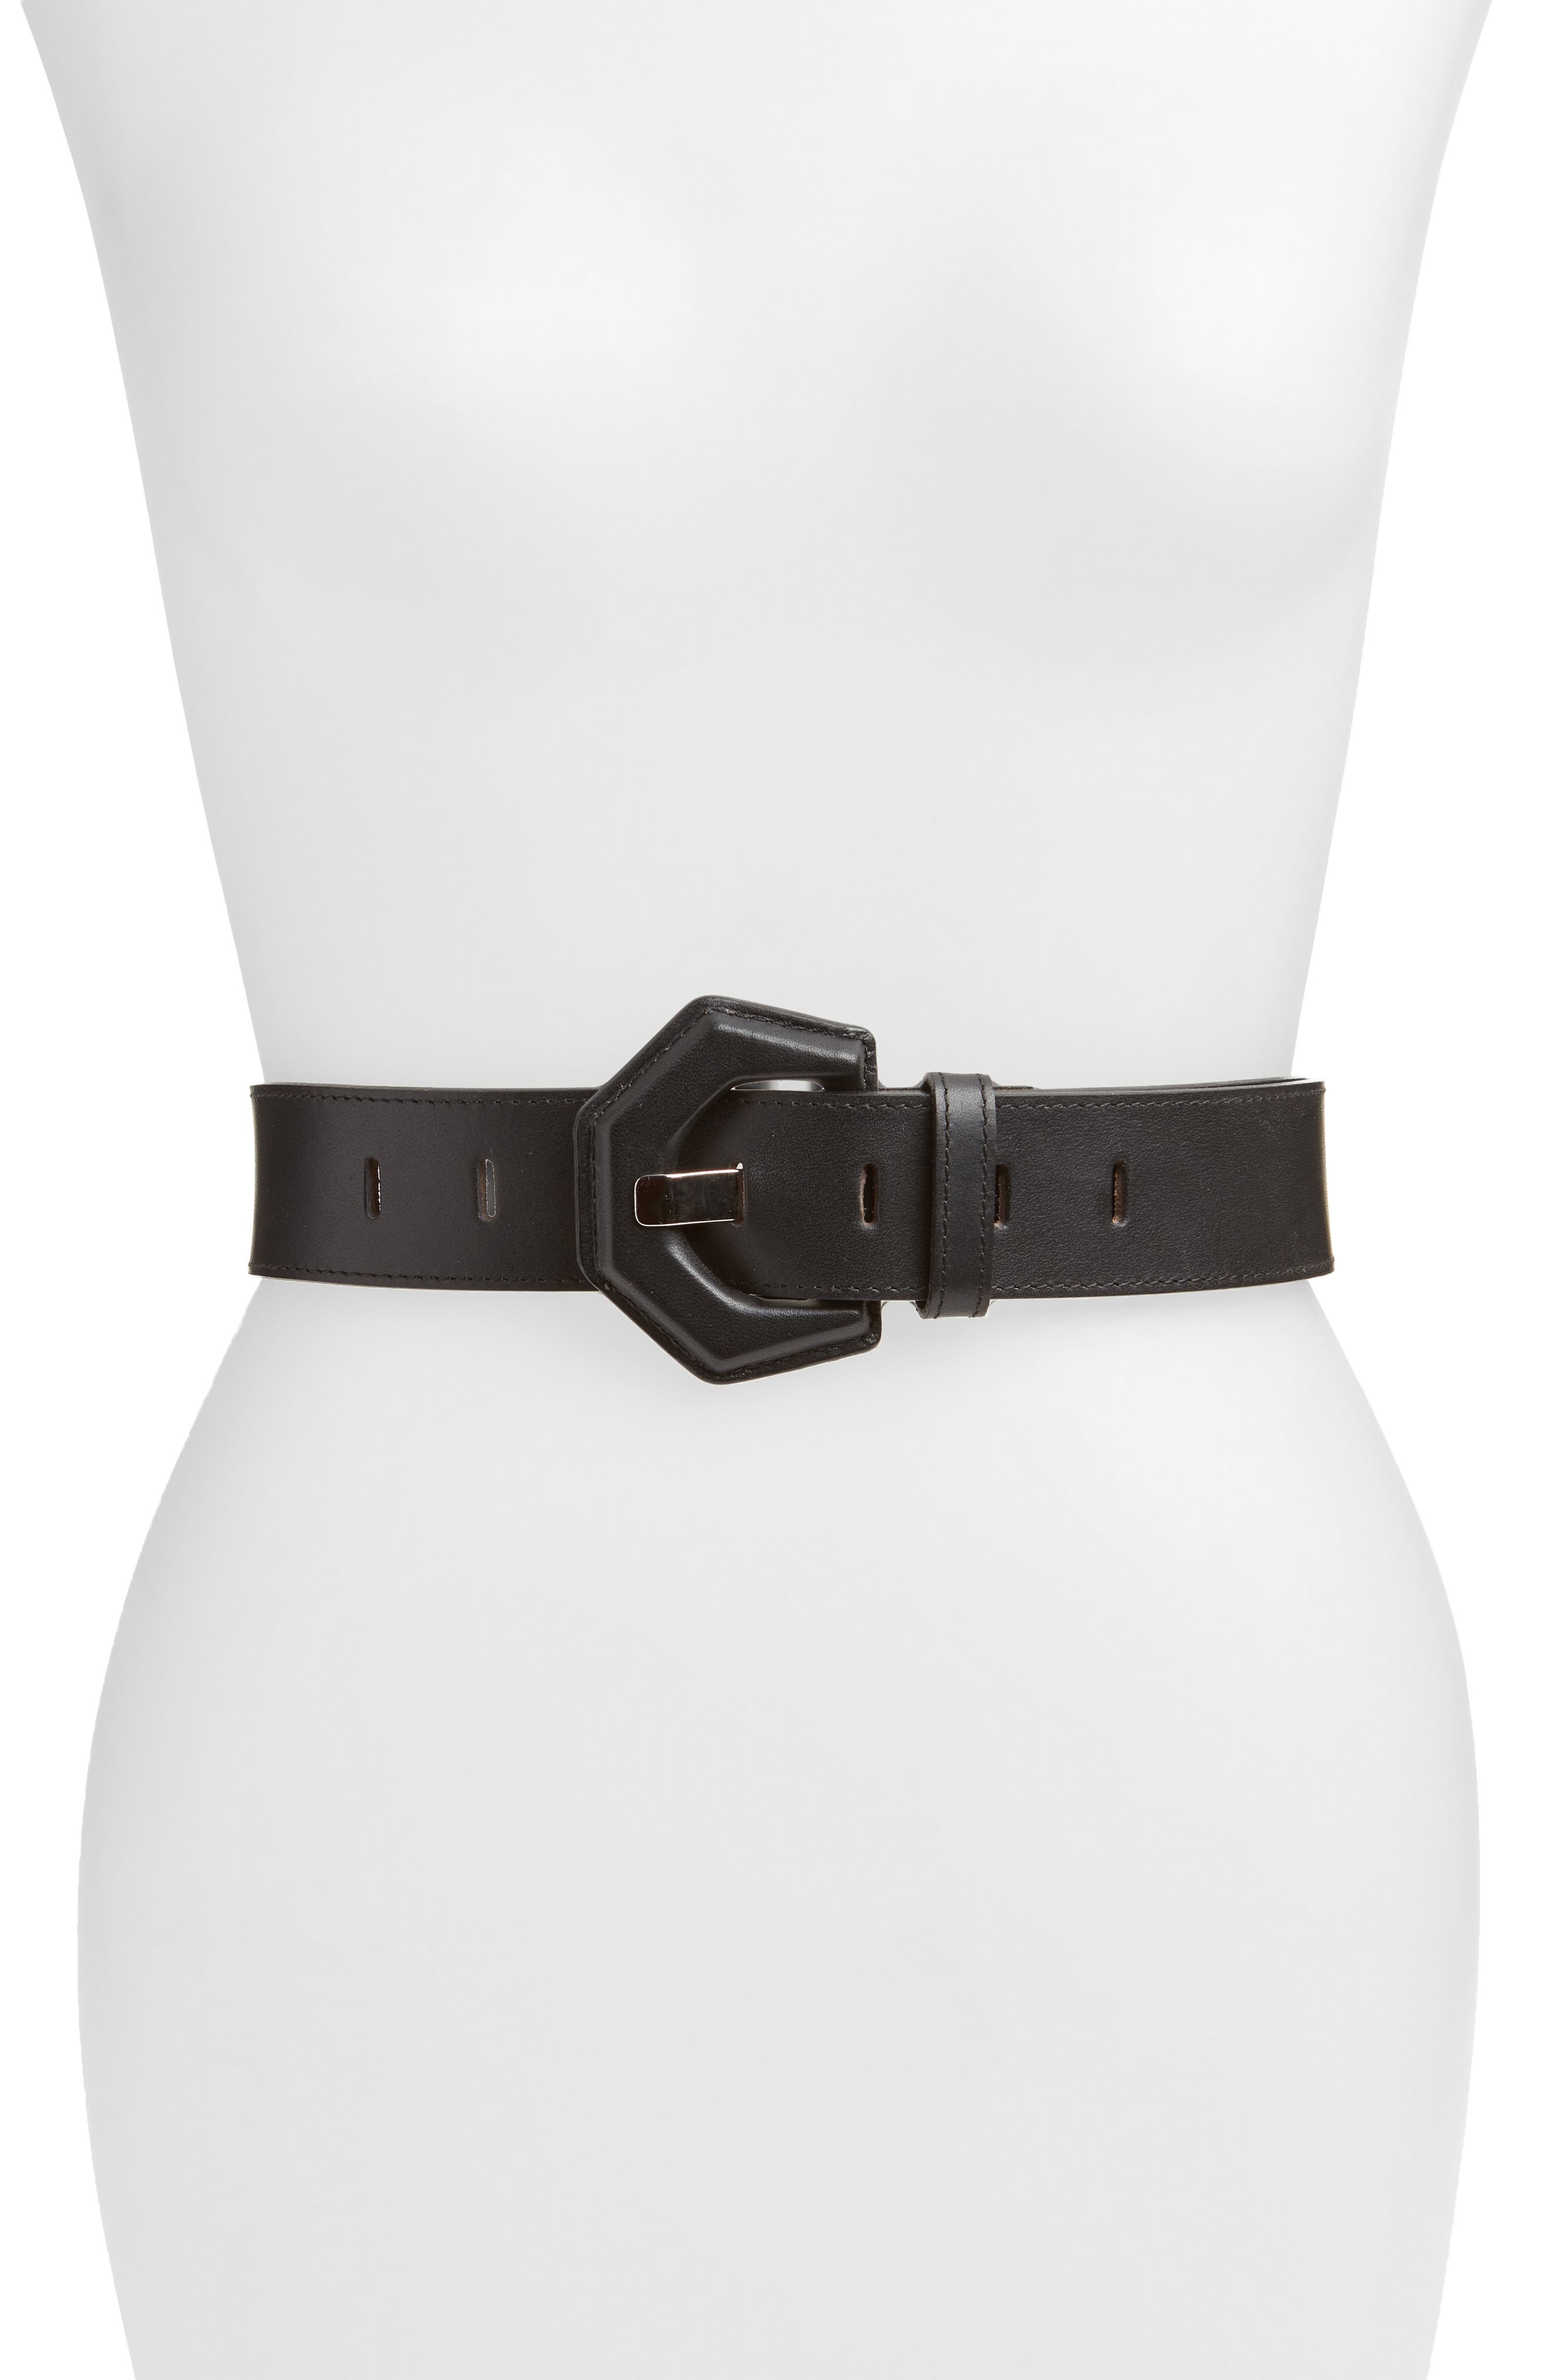 Narrow BLACK belt gift for woman retro non leather belt